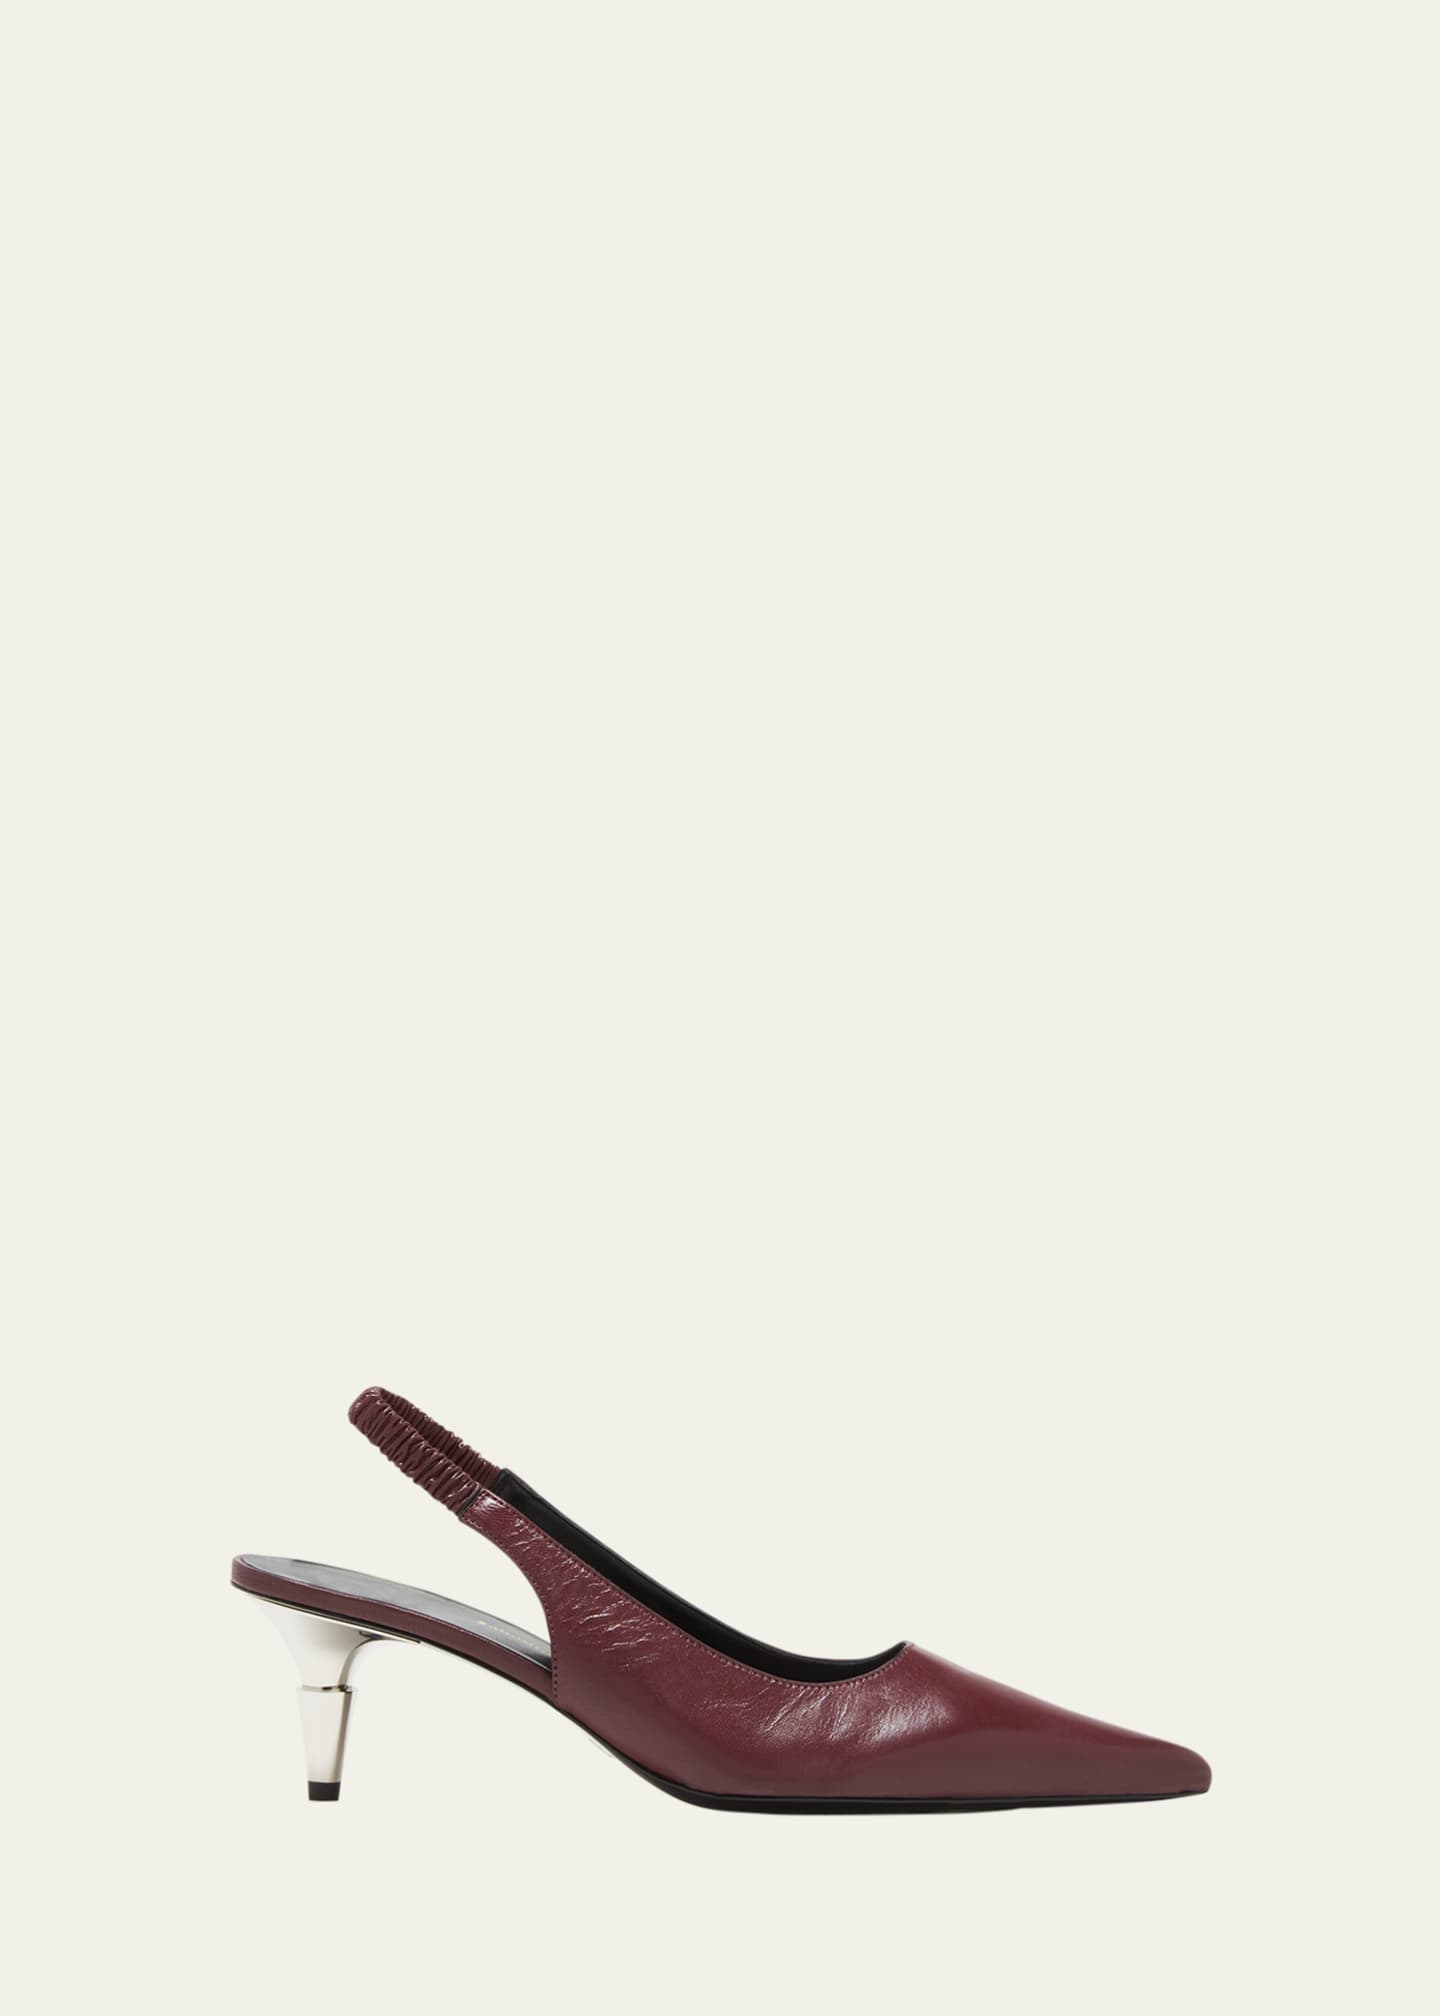 Burgundy Slingback Pumps Patent Leather Stiletto Heel Pumps